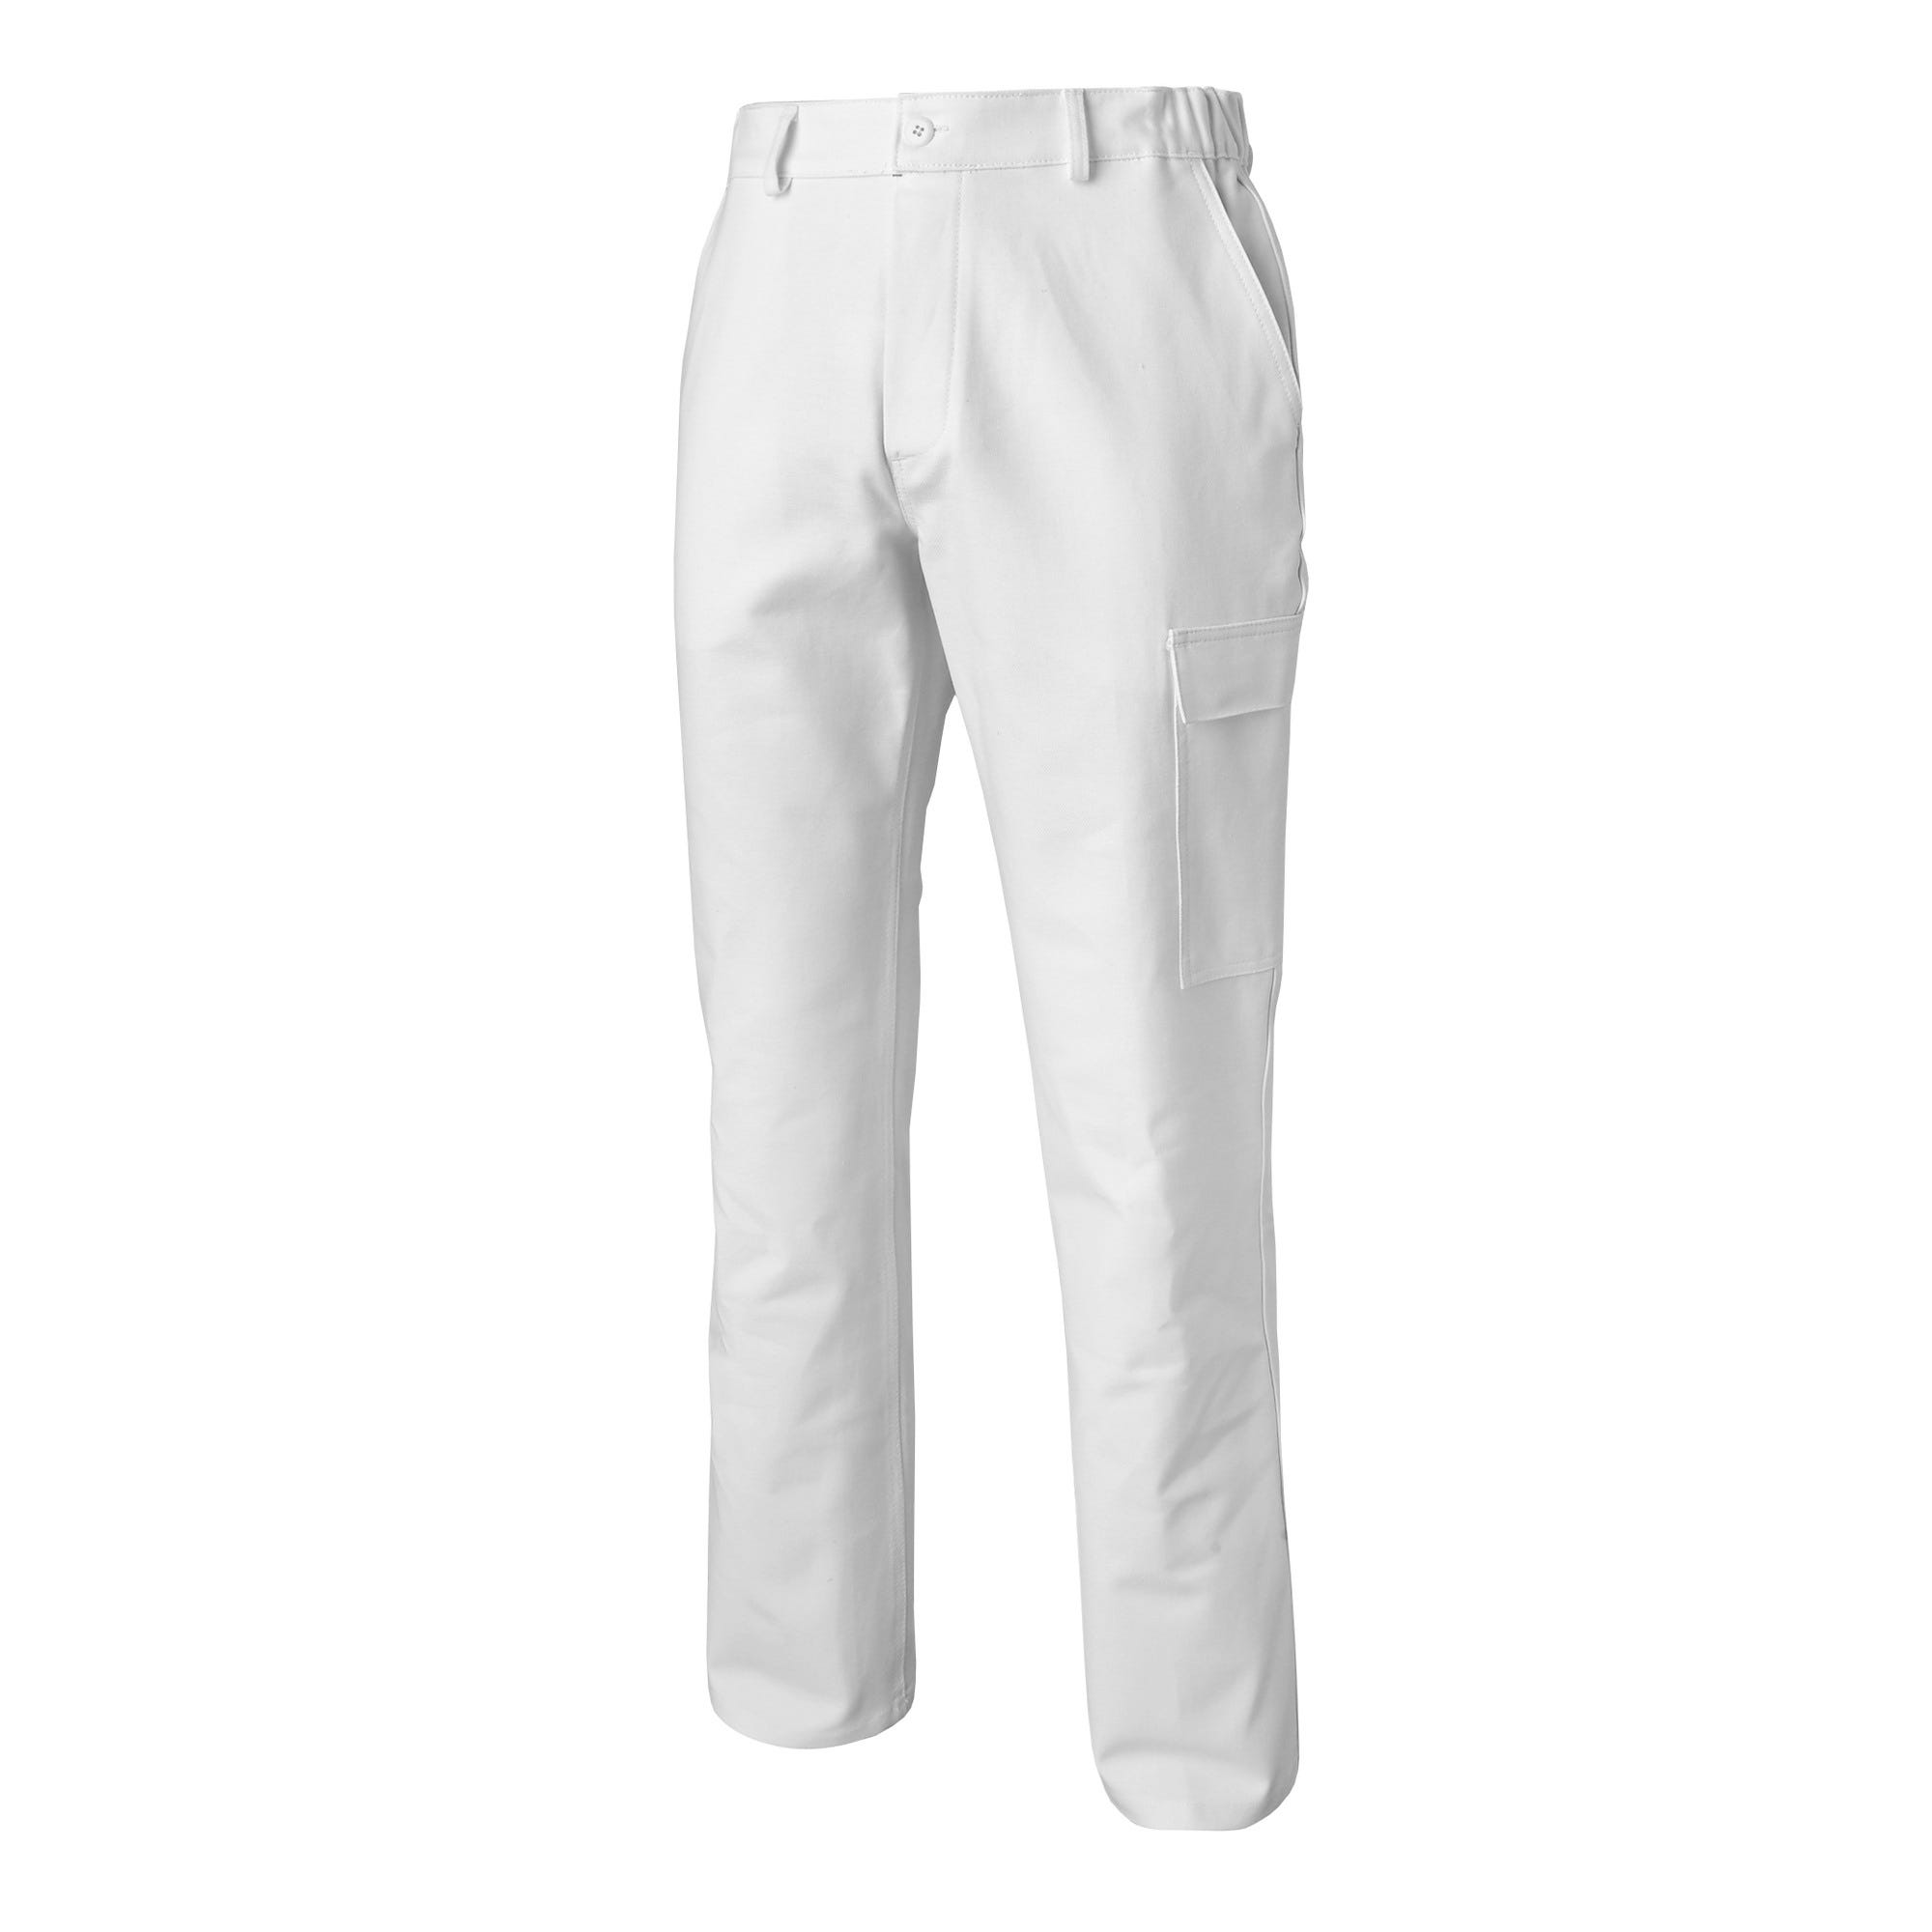 Pantalon de travail Blanc T.0 New pilote - MOLINEL 0